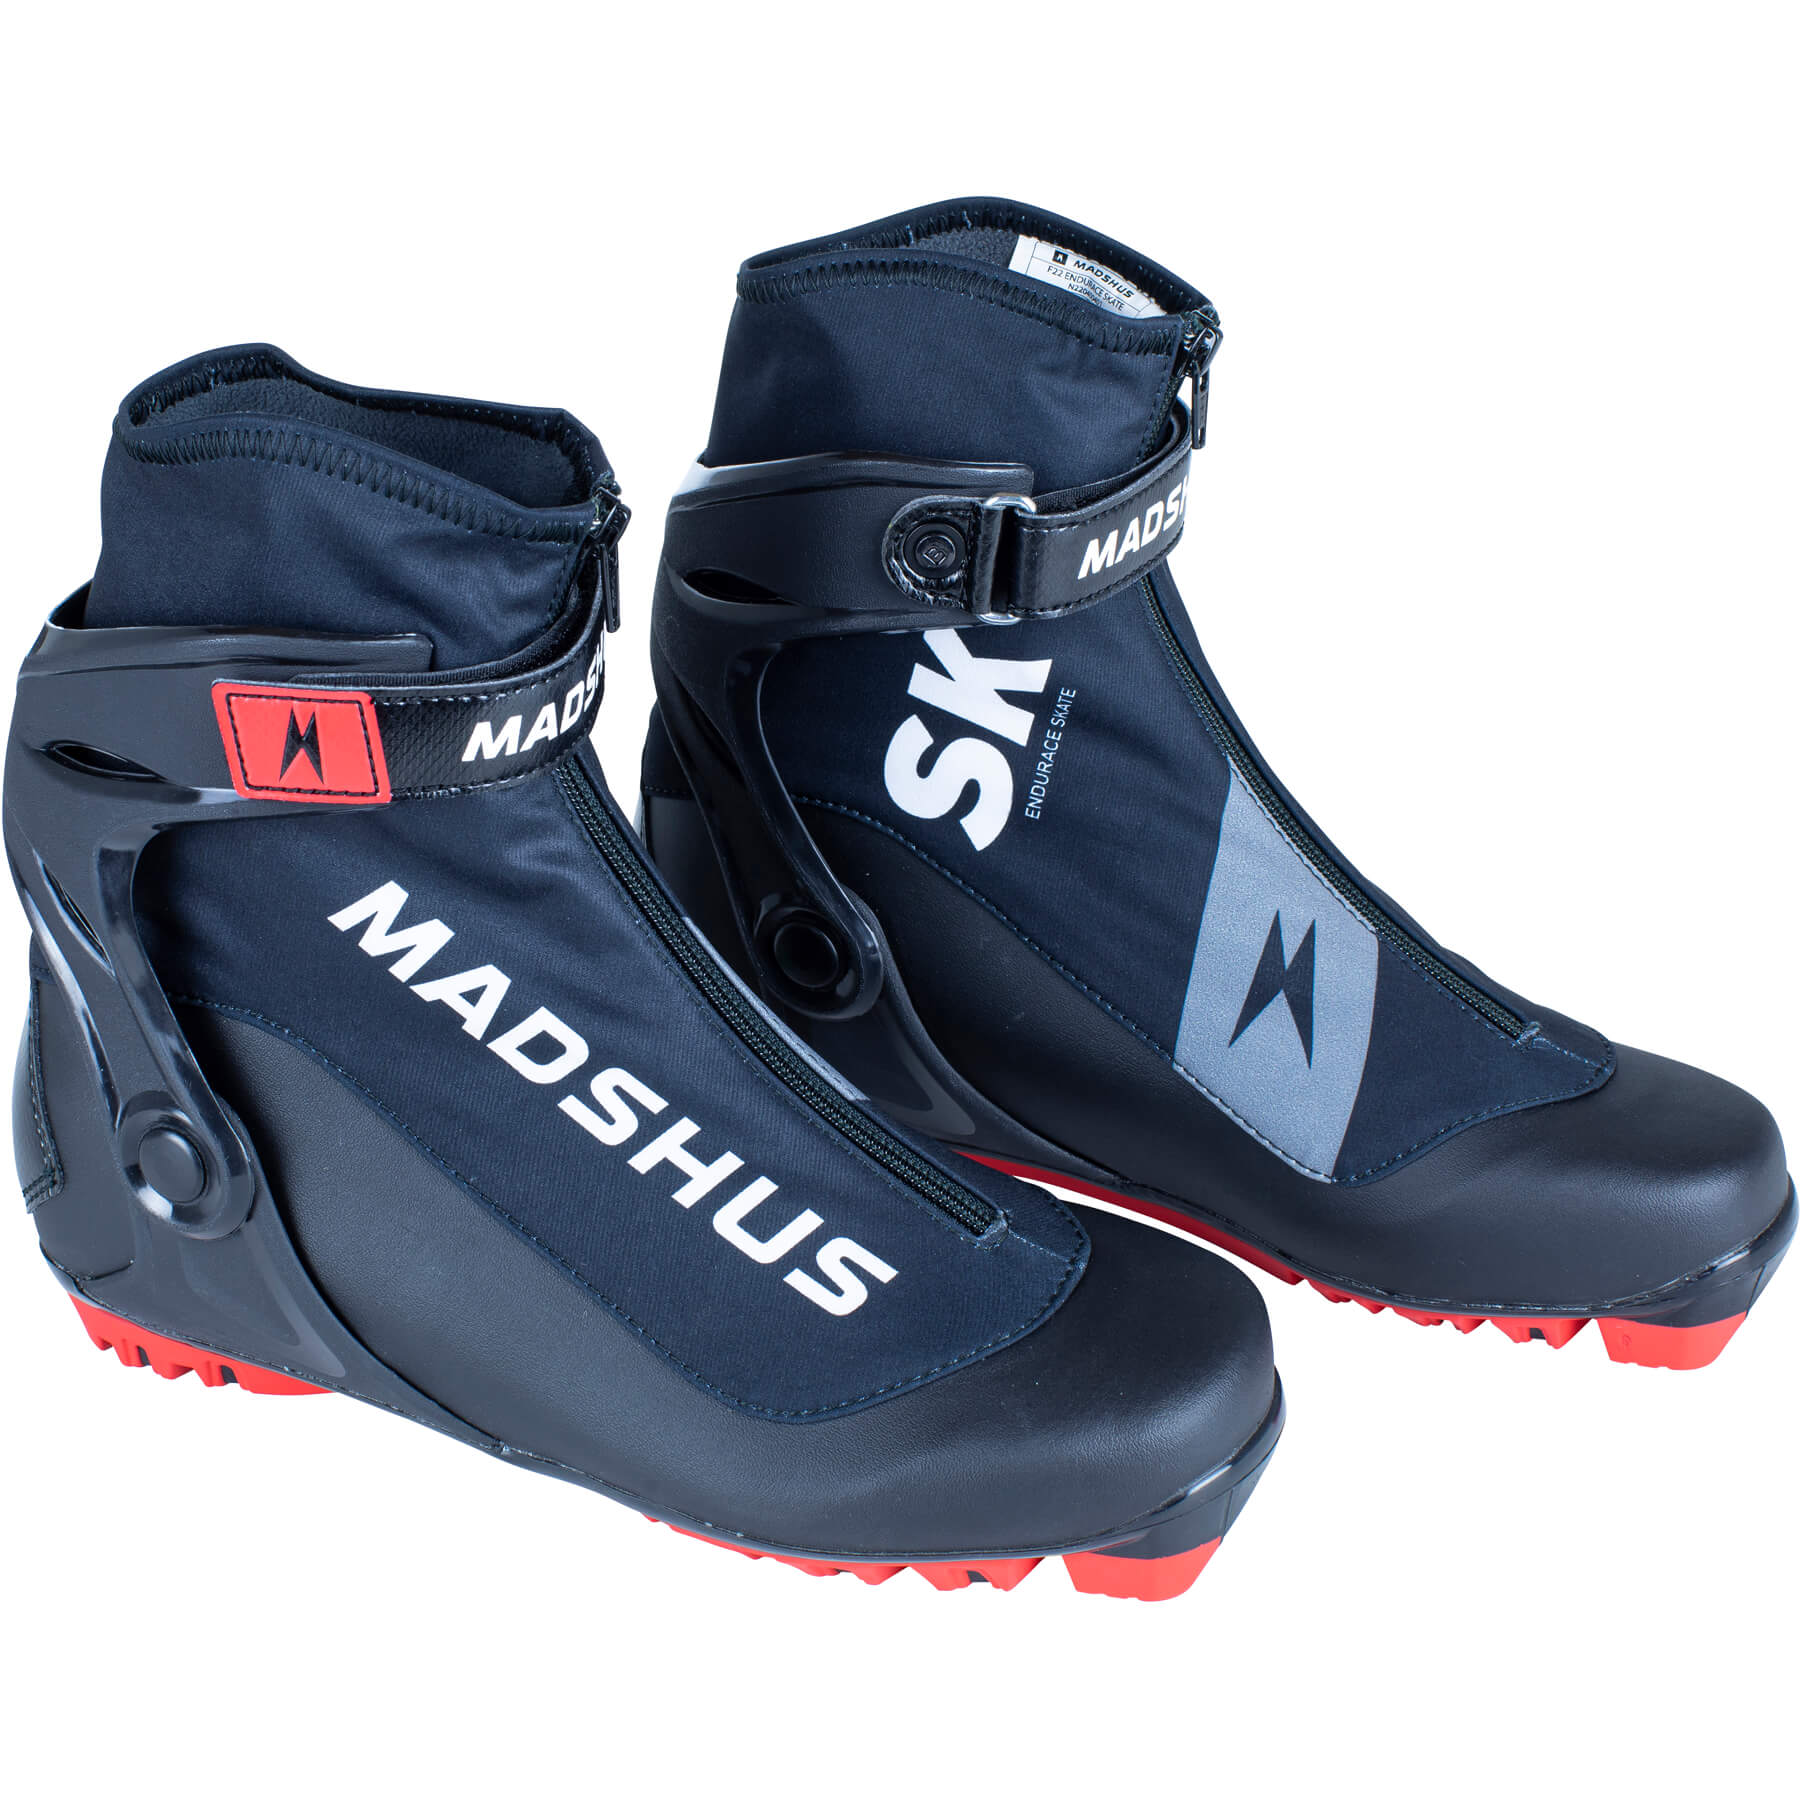 Madshus Endurace Skate Boot - 0